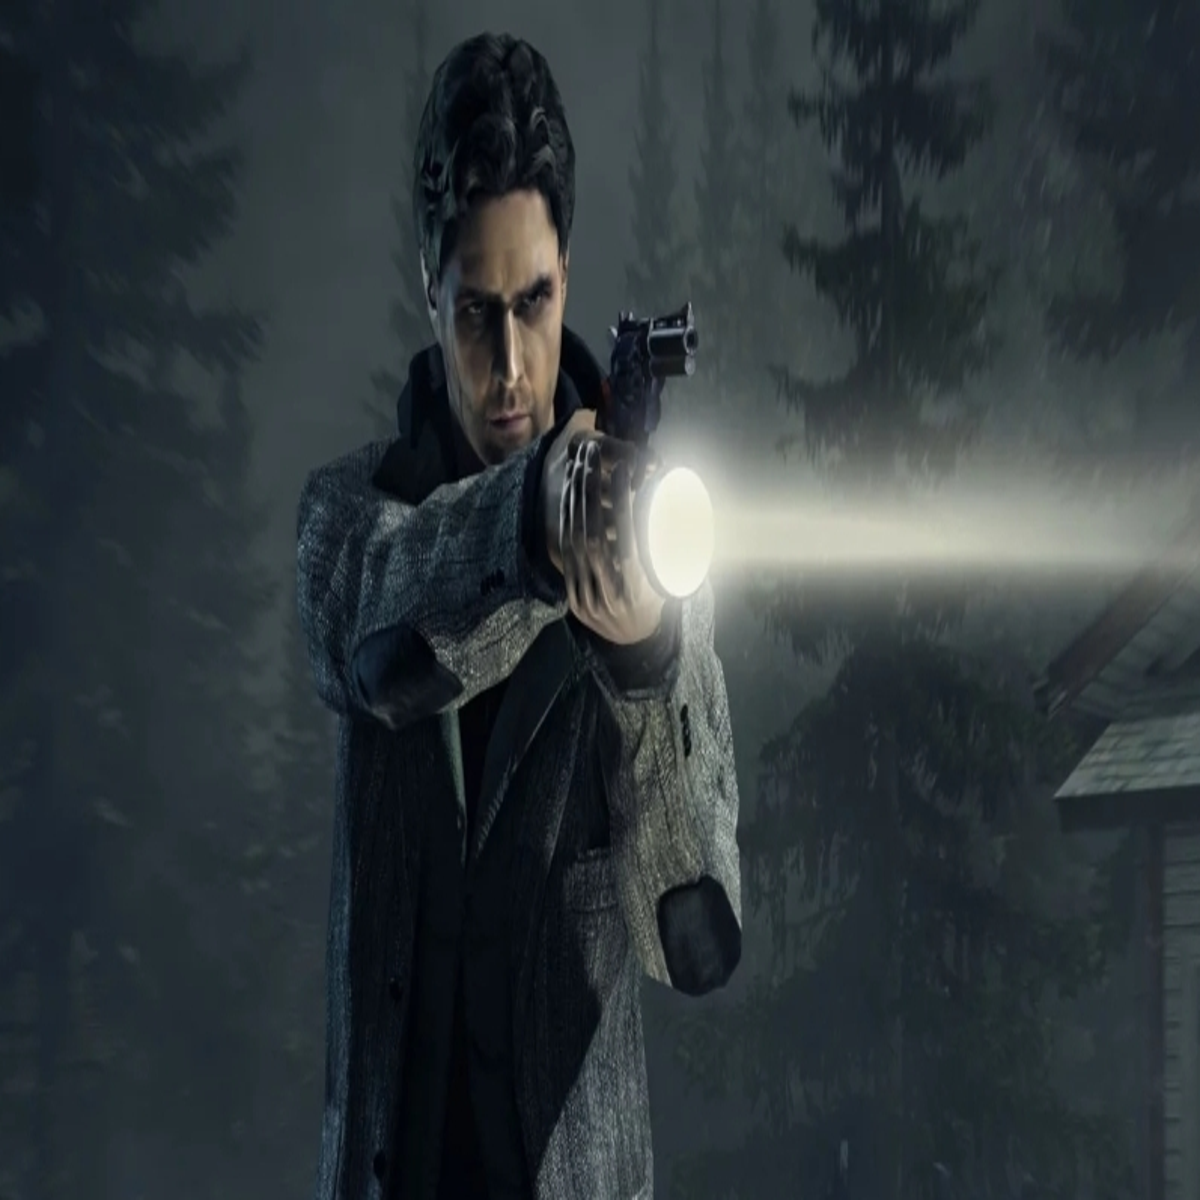 Is Alan Wake 2 Coming to Xbox Game Pass? - News